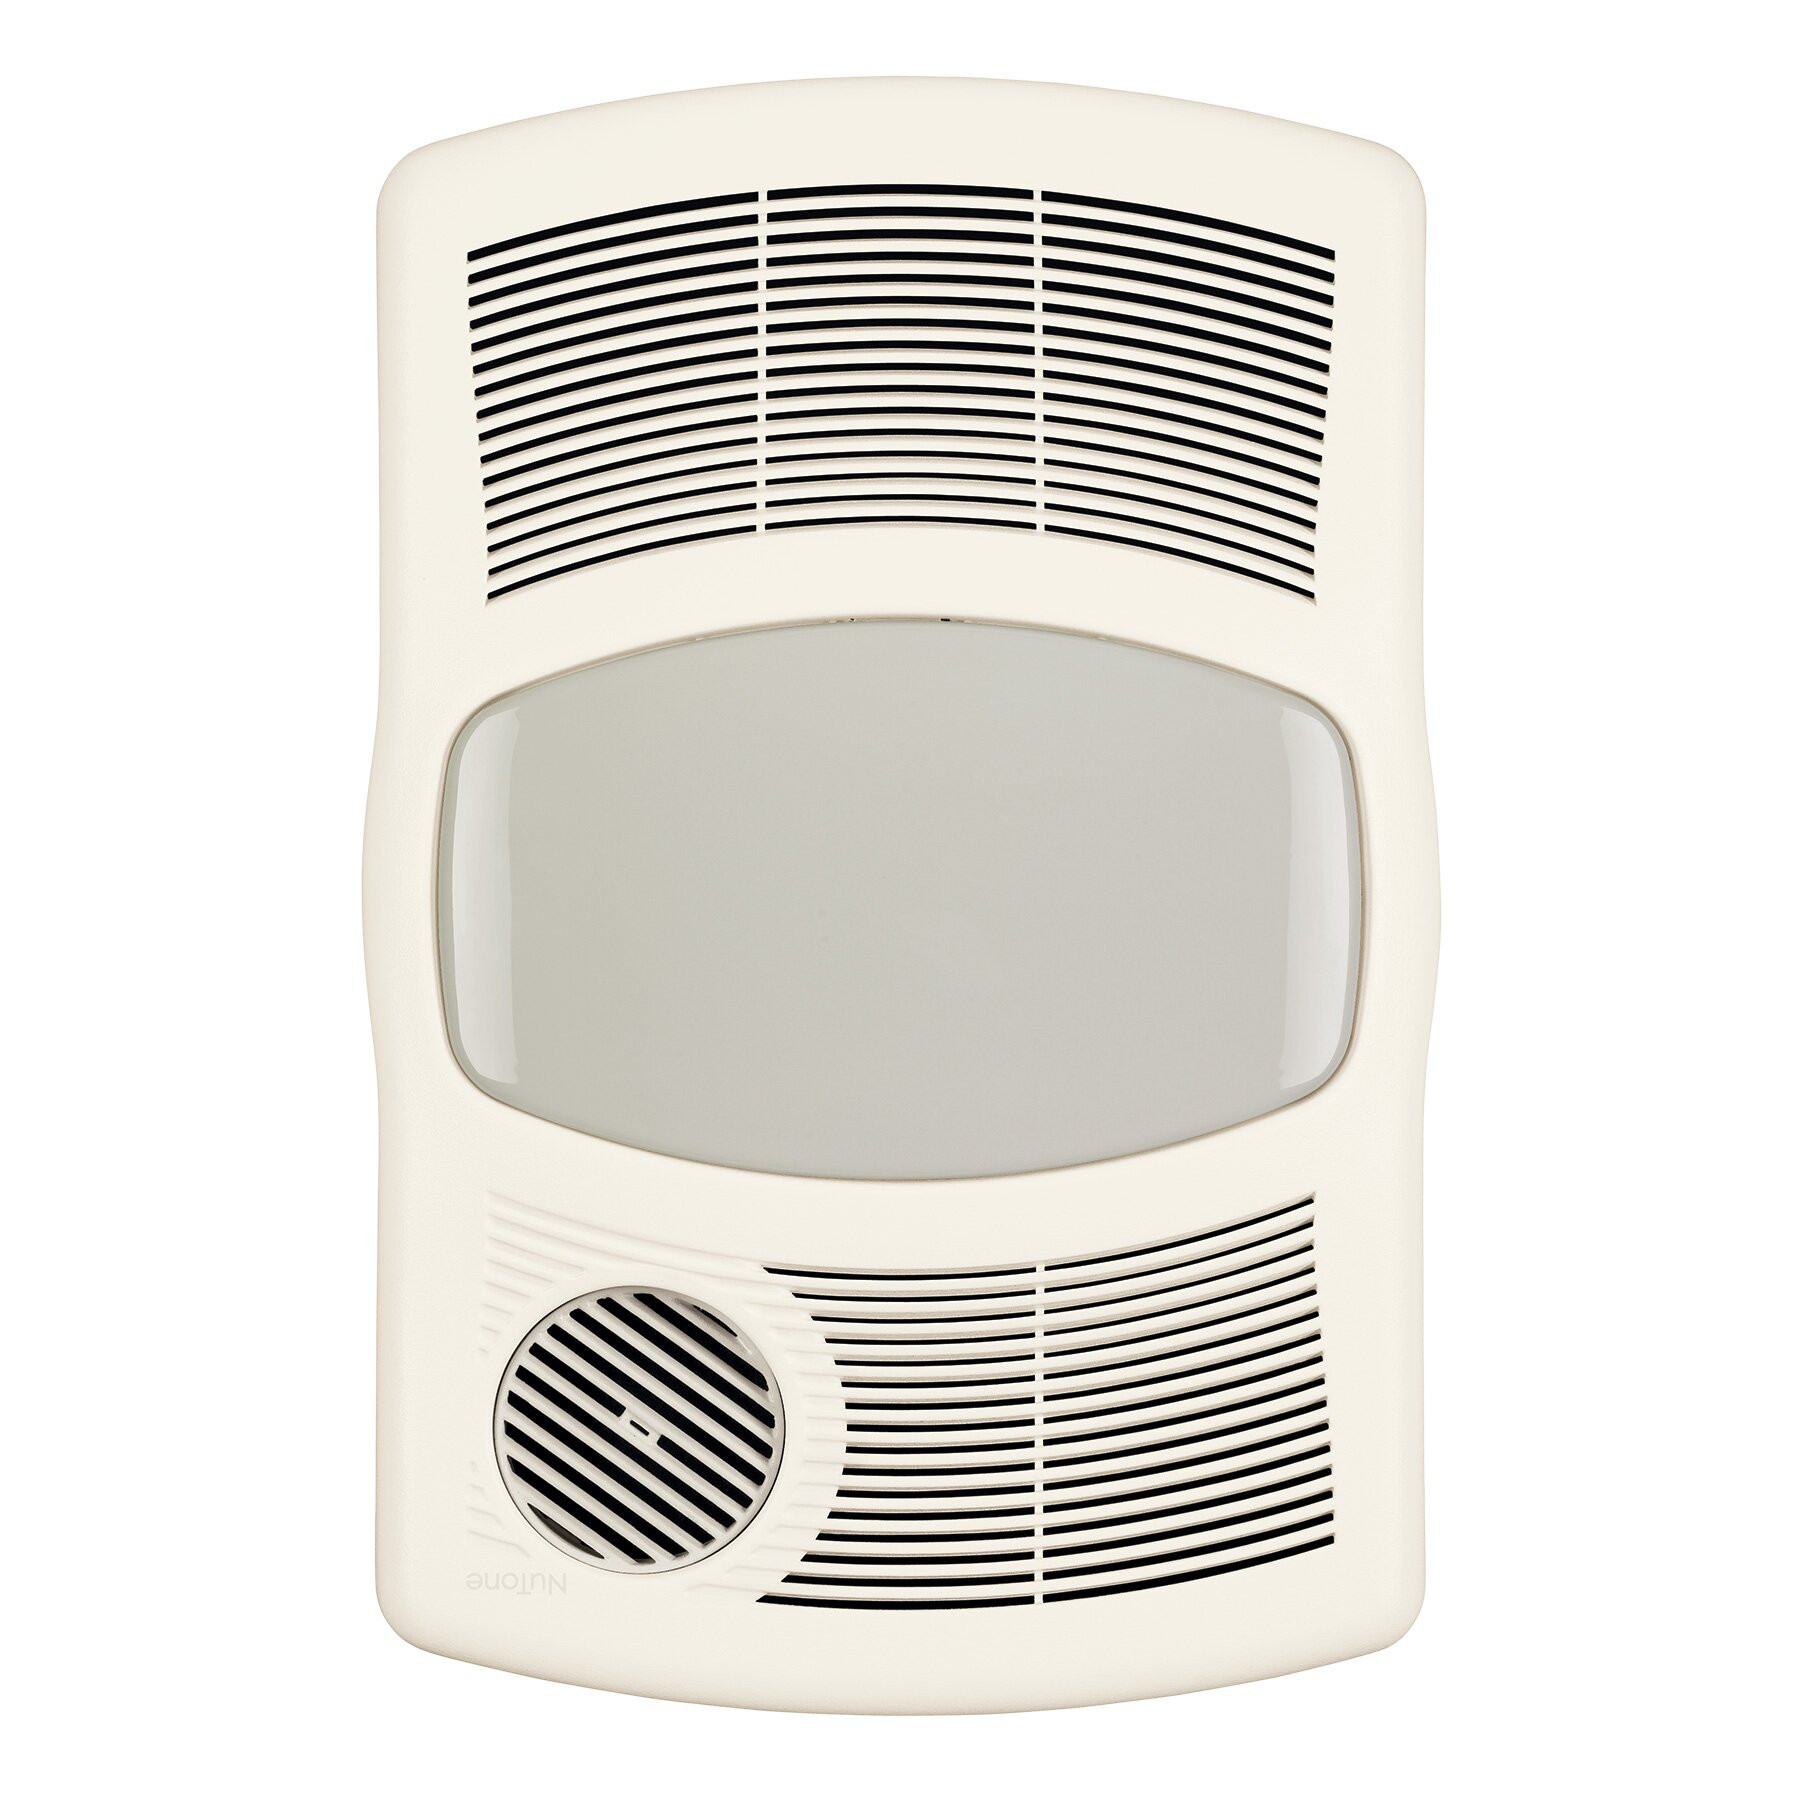 Bathroom Exhaust Fan And Heater
 Broan 100 CFM Exhaust Bathroom Fan with Heater & Reviews